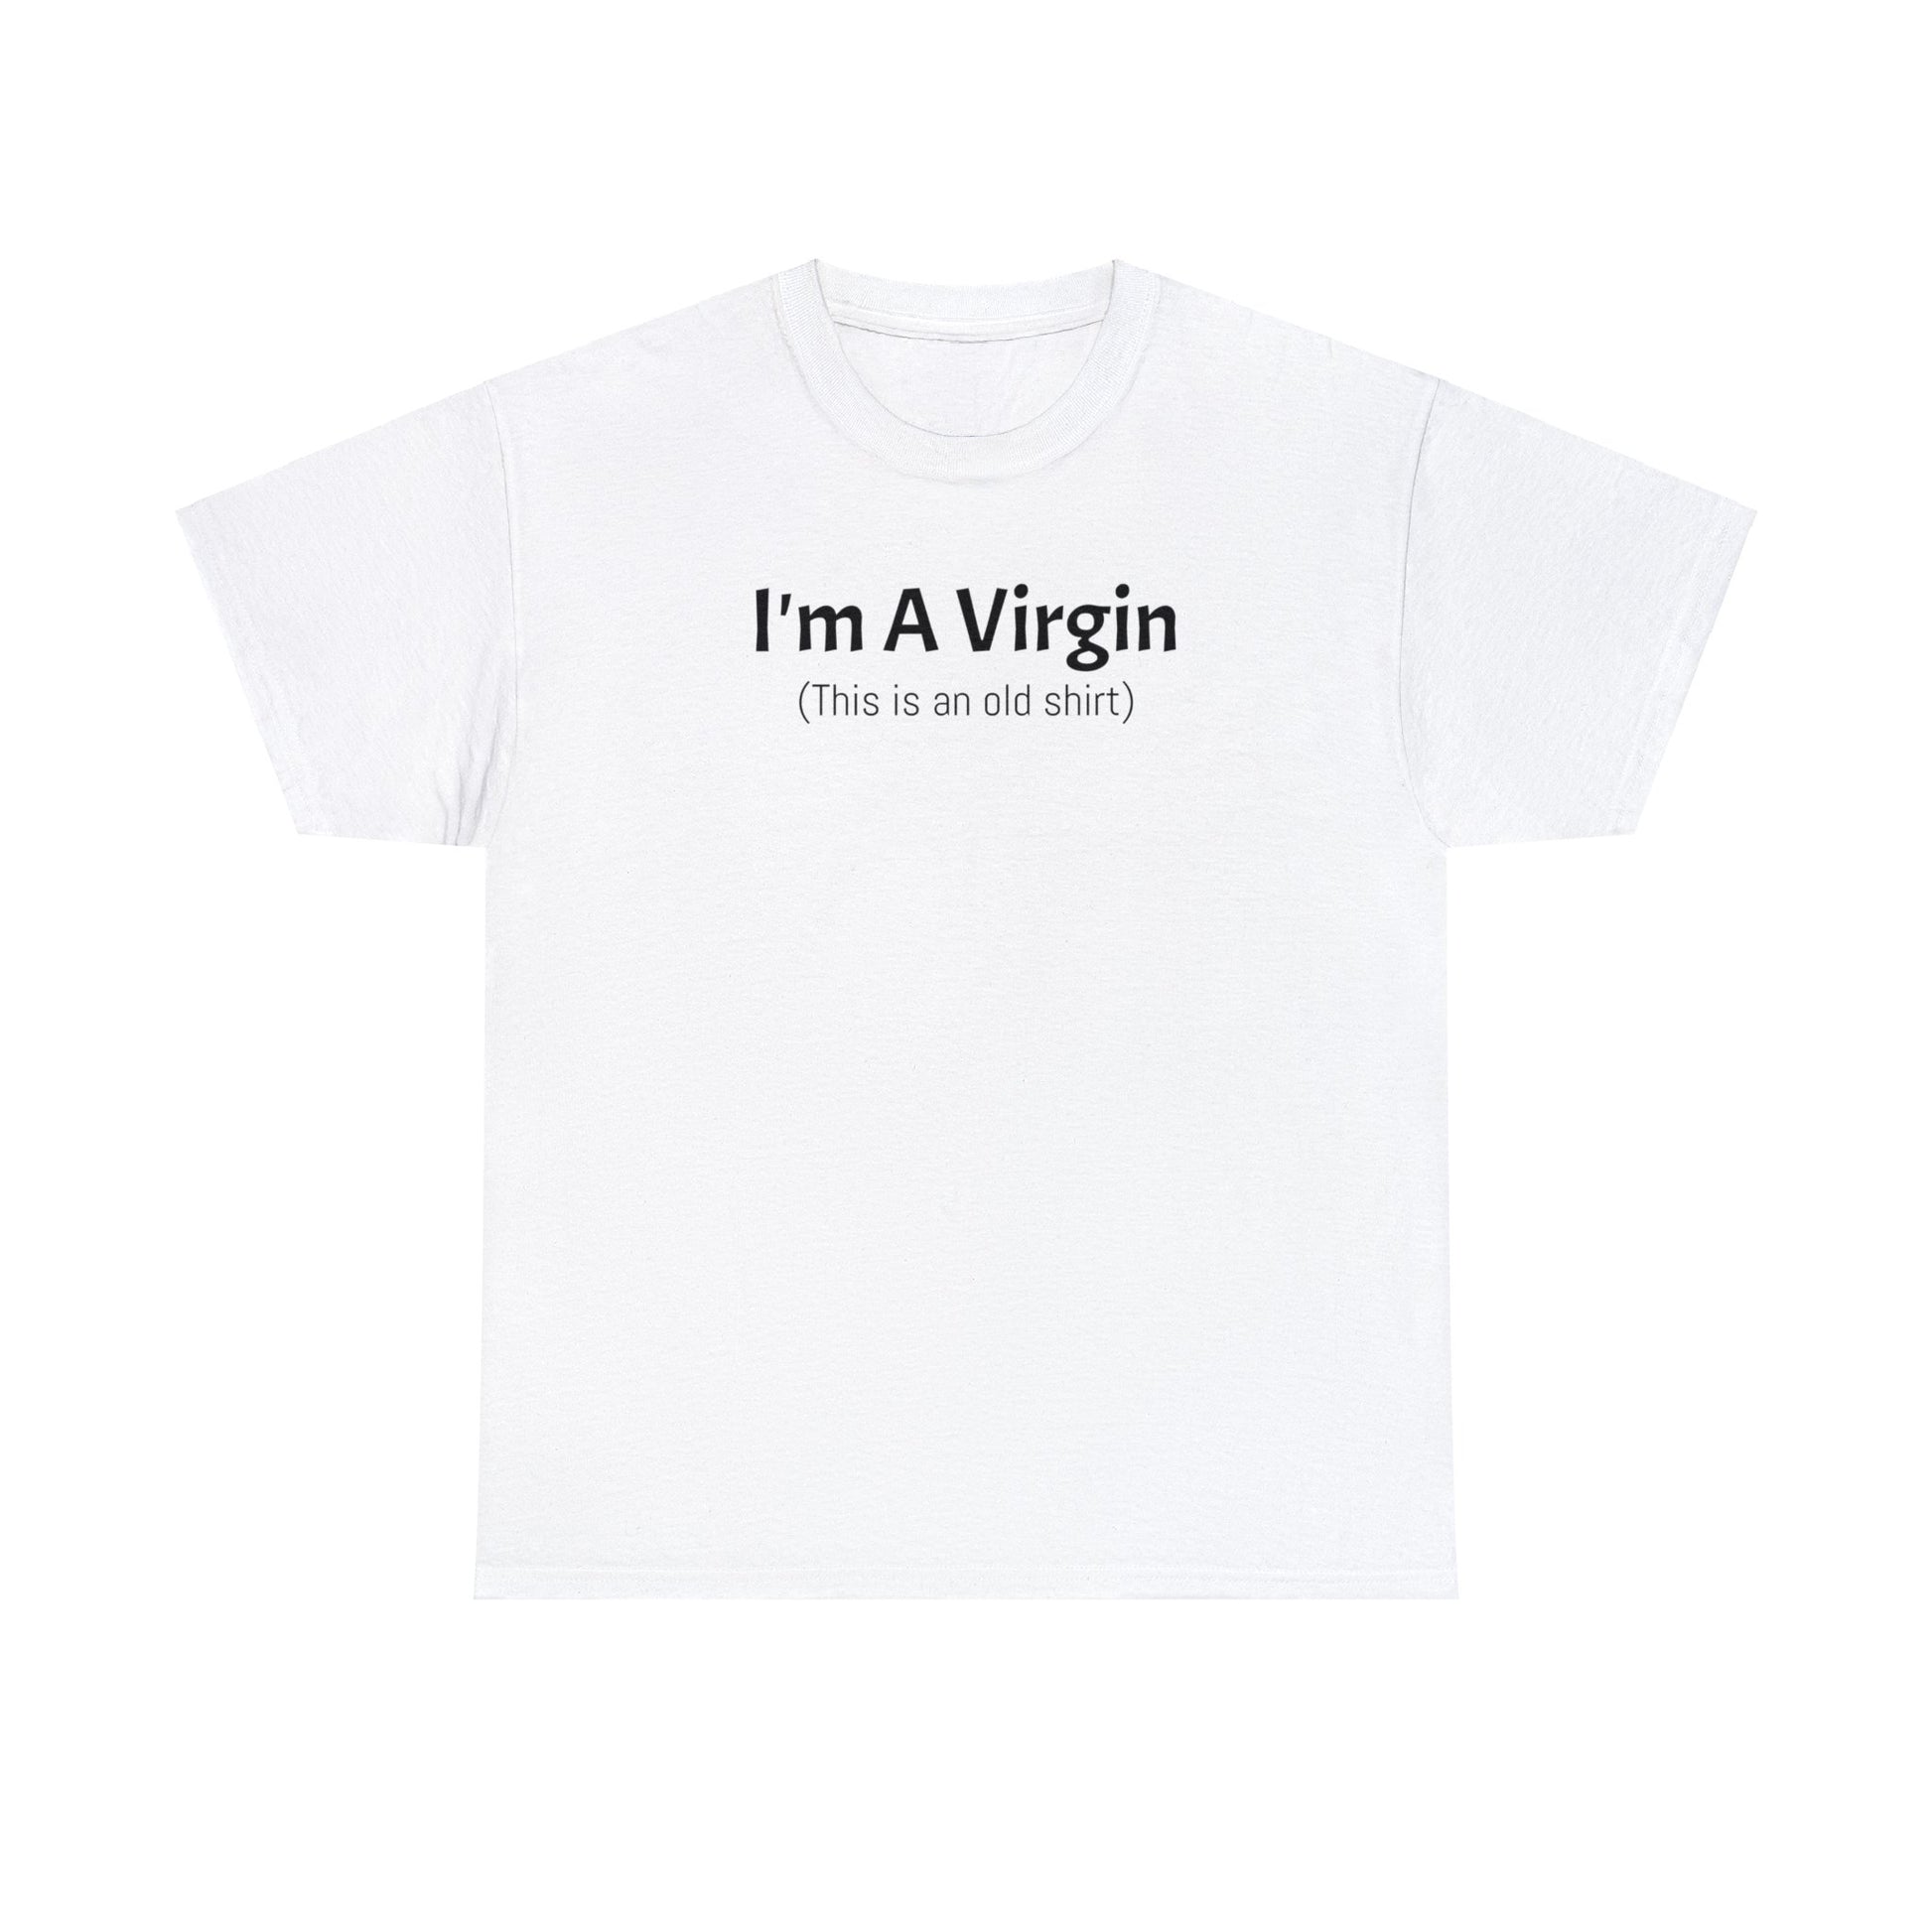 "I'm a Virgin" Tee White